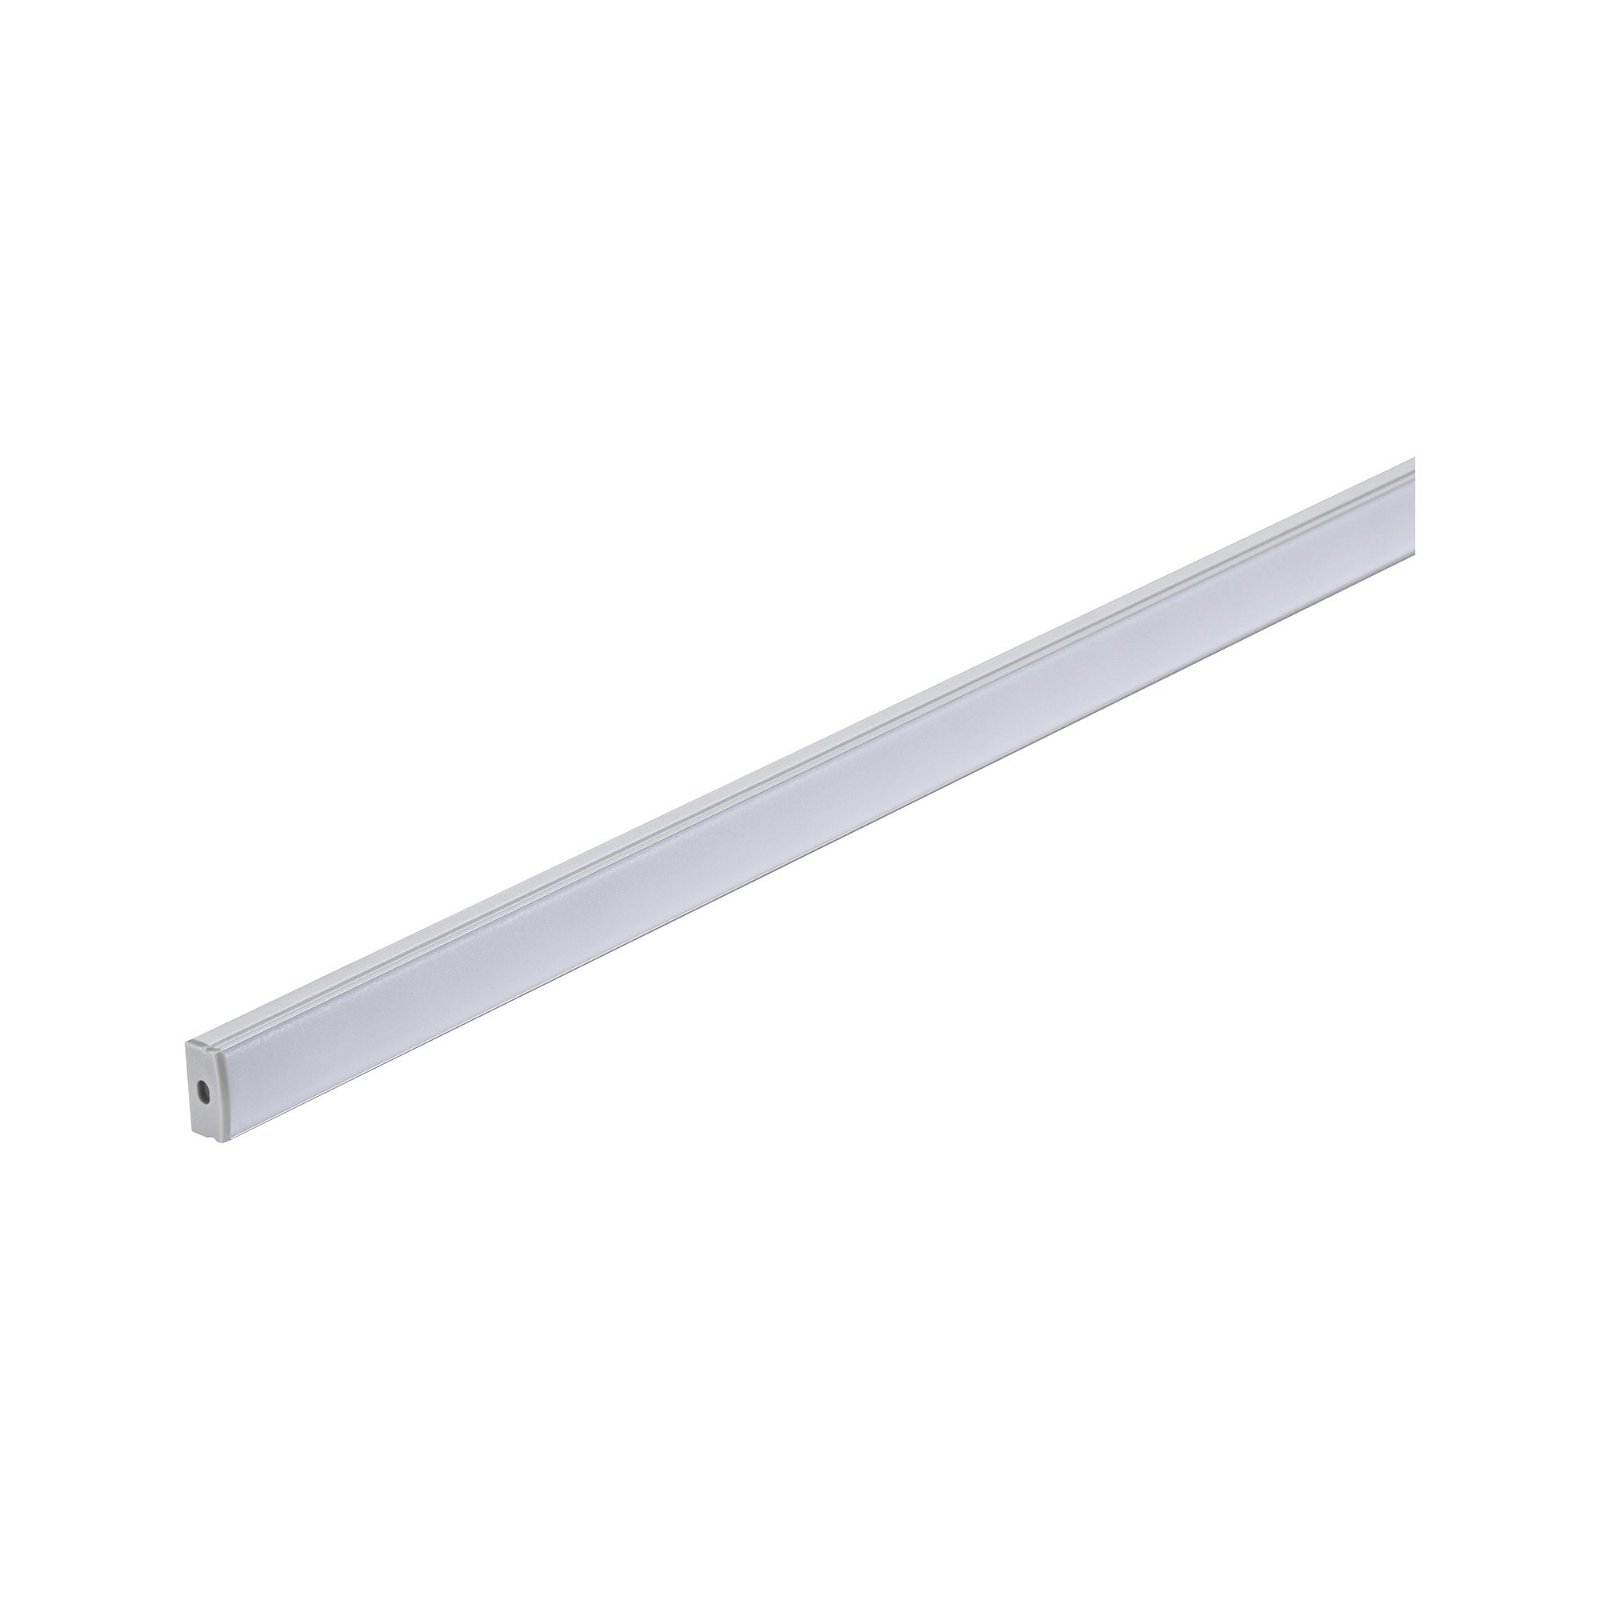 LED Strip Profil Base Weißer Diffusor 1m Alu eloxiert/Satin